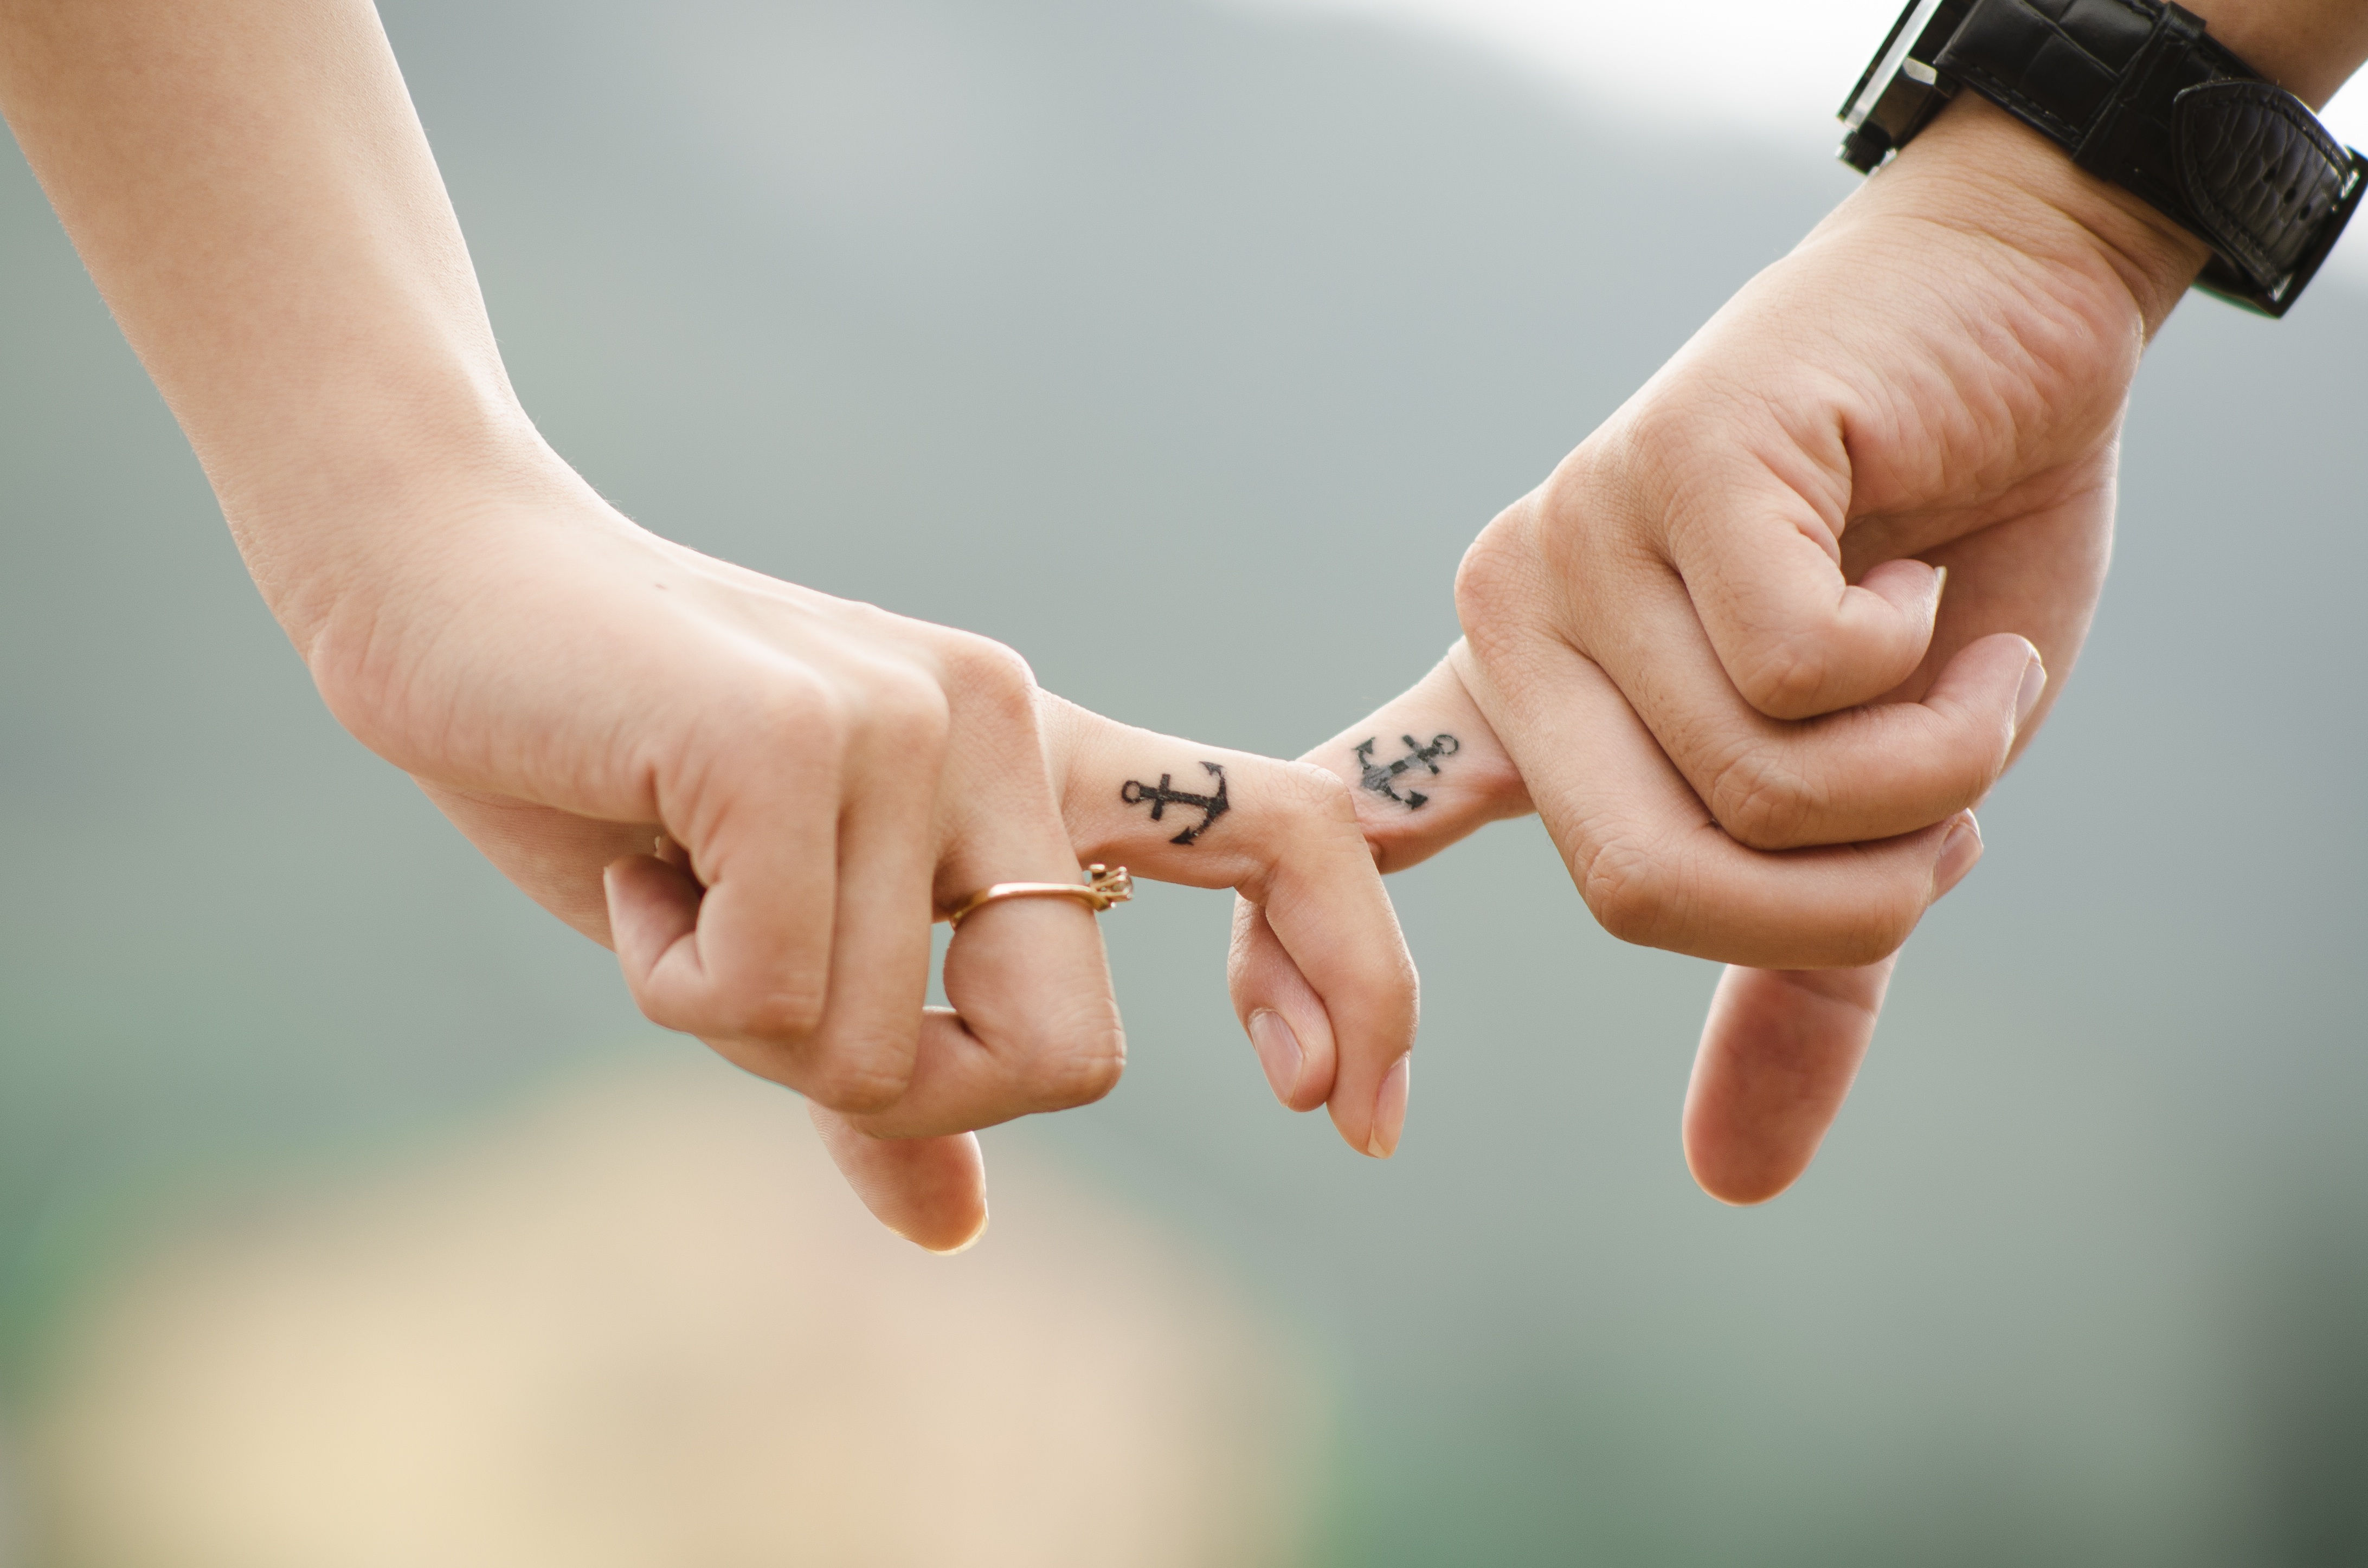 2 interlocking fingers with matching tattoos